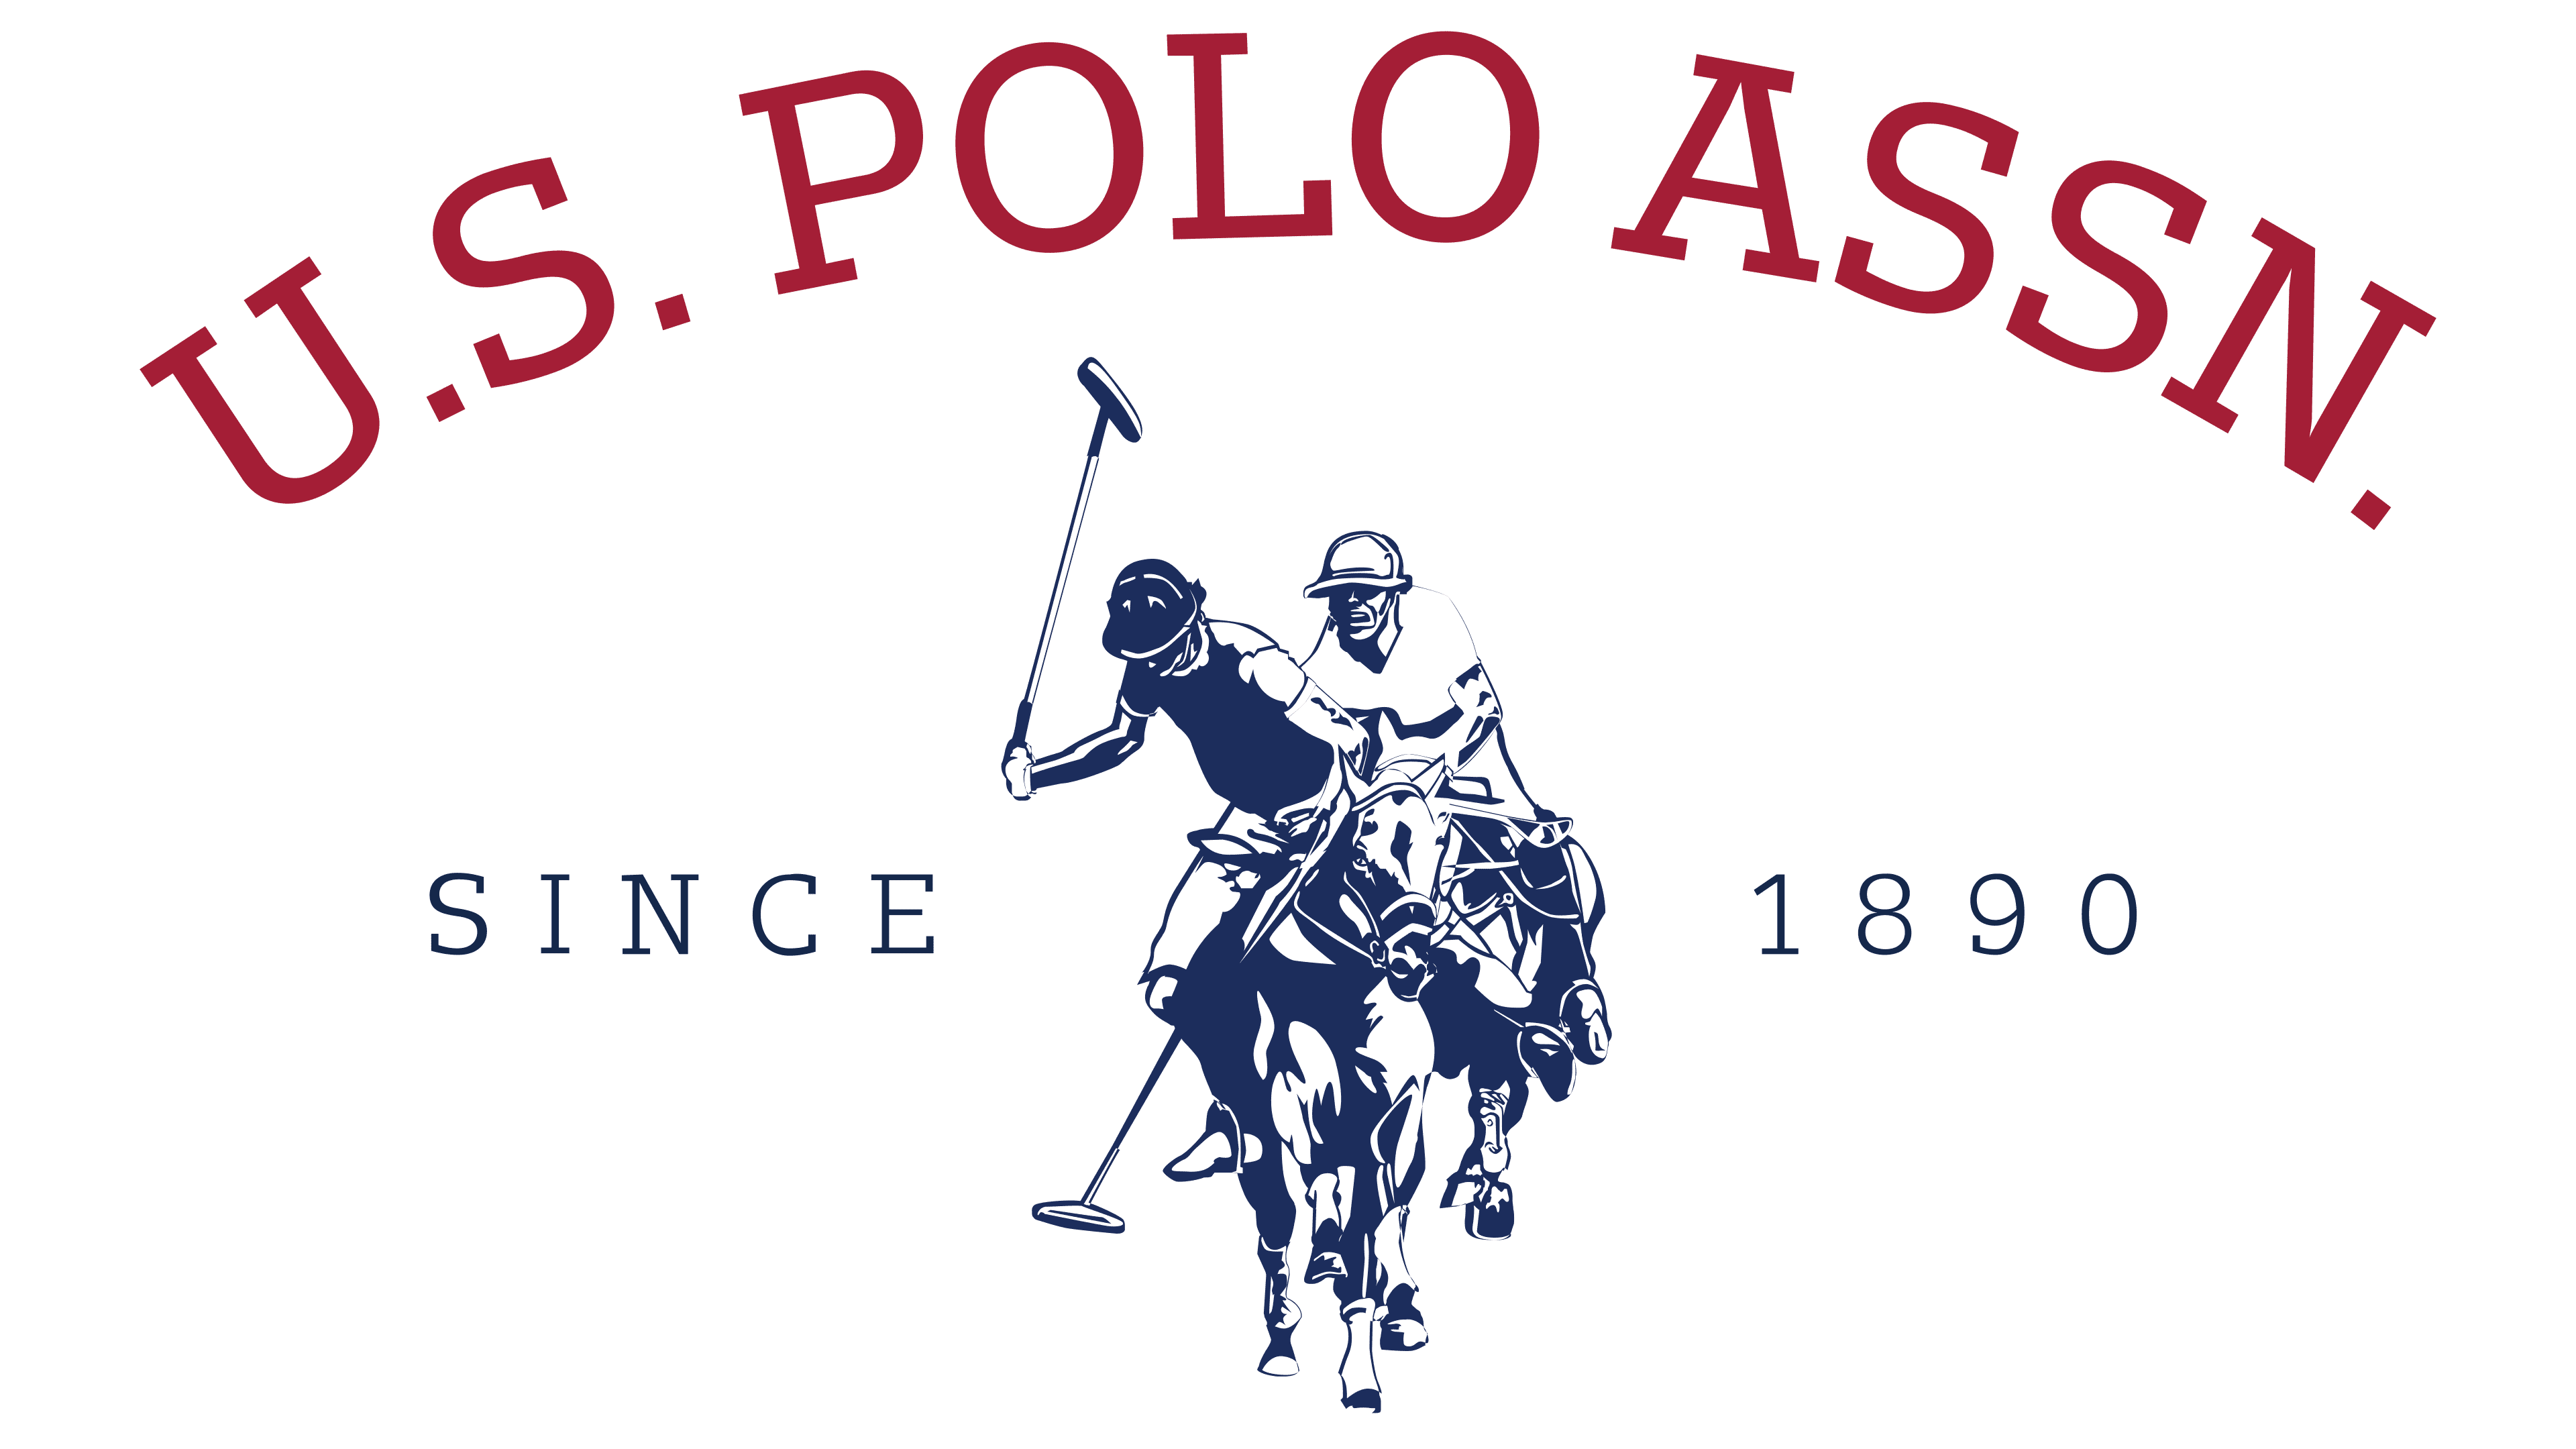 Mujer esférico Inmigración U.S. Polo Assn Logo, symbol, meaning, history, PNG, brand